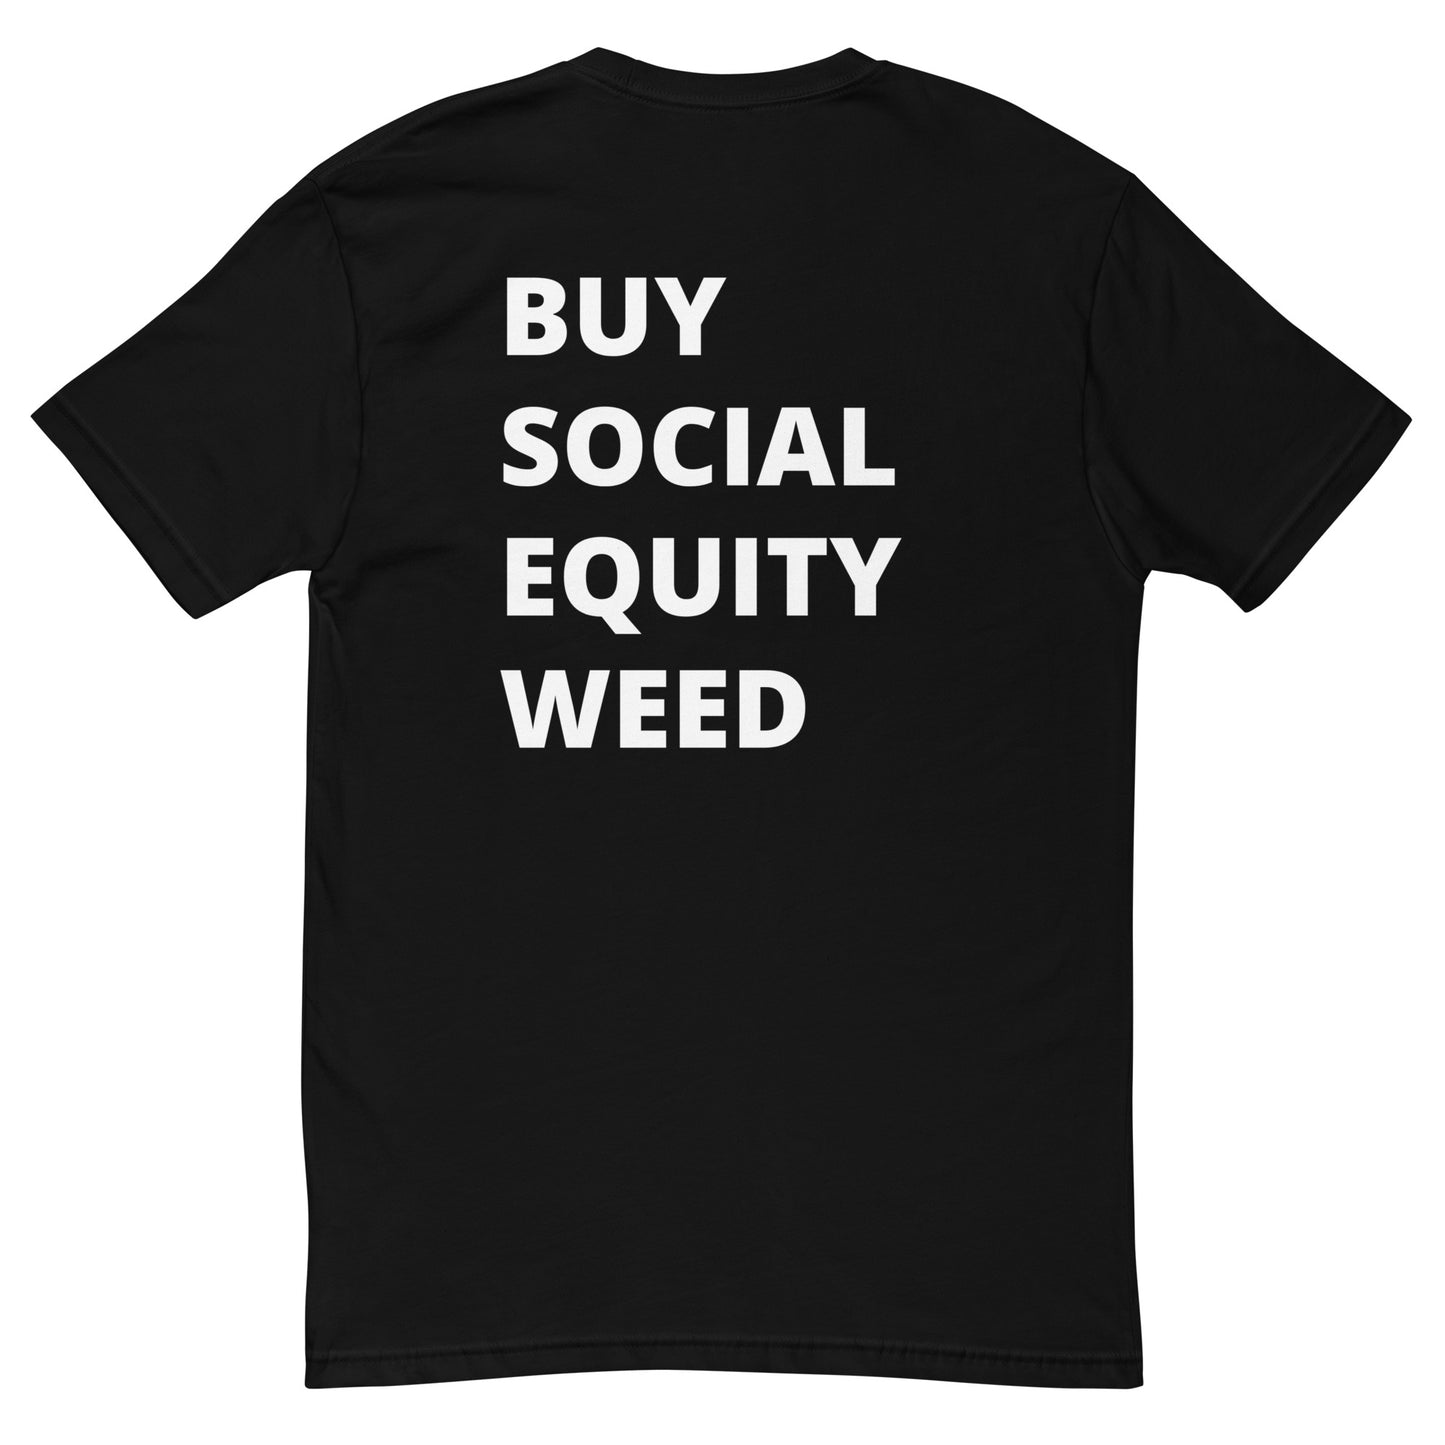 Deo's Garden "Buy Social Equity Weed" Short Sleeve T-shirt